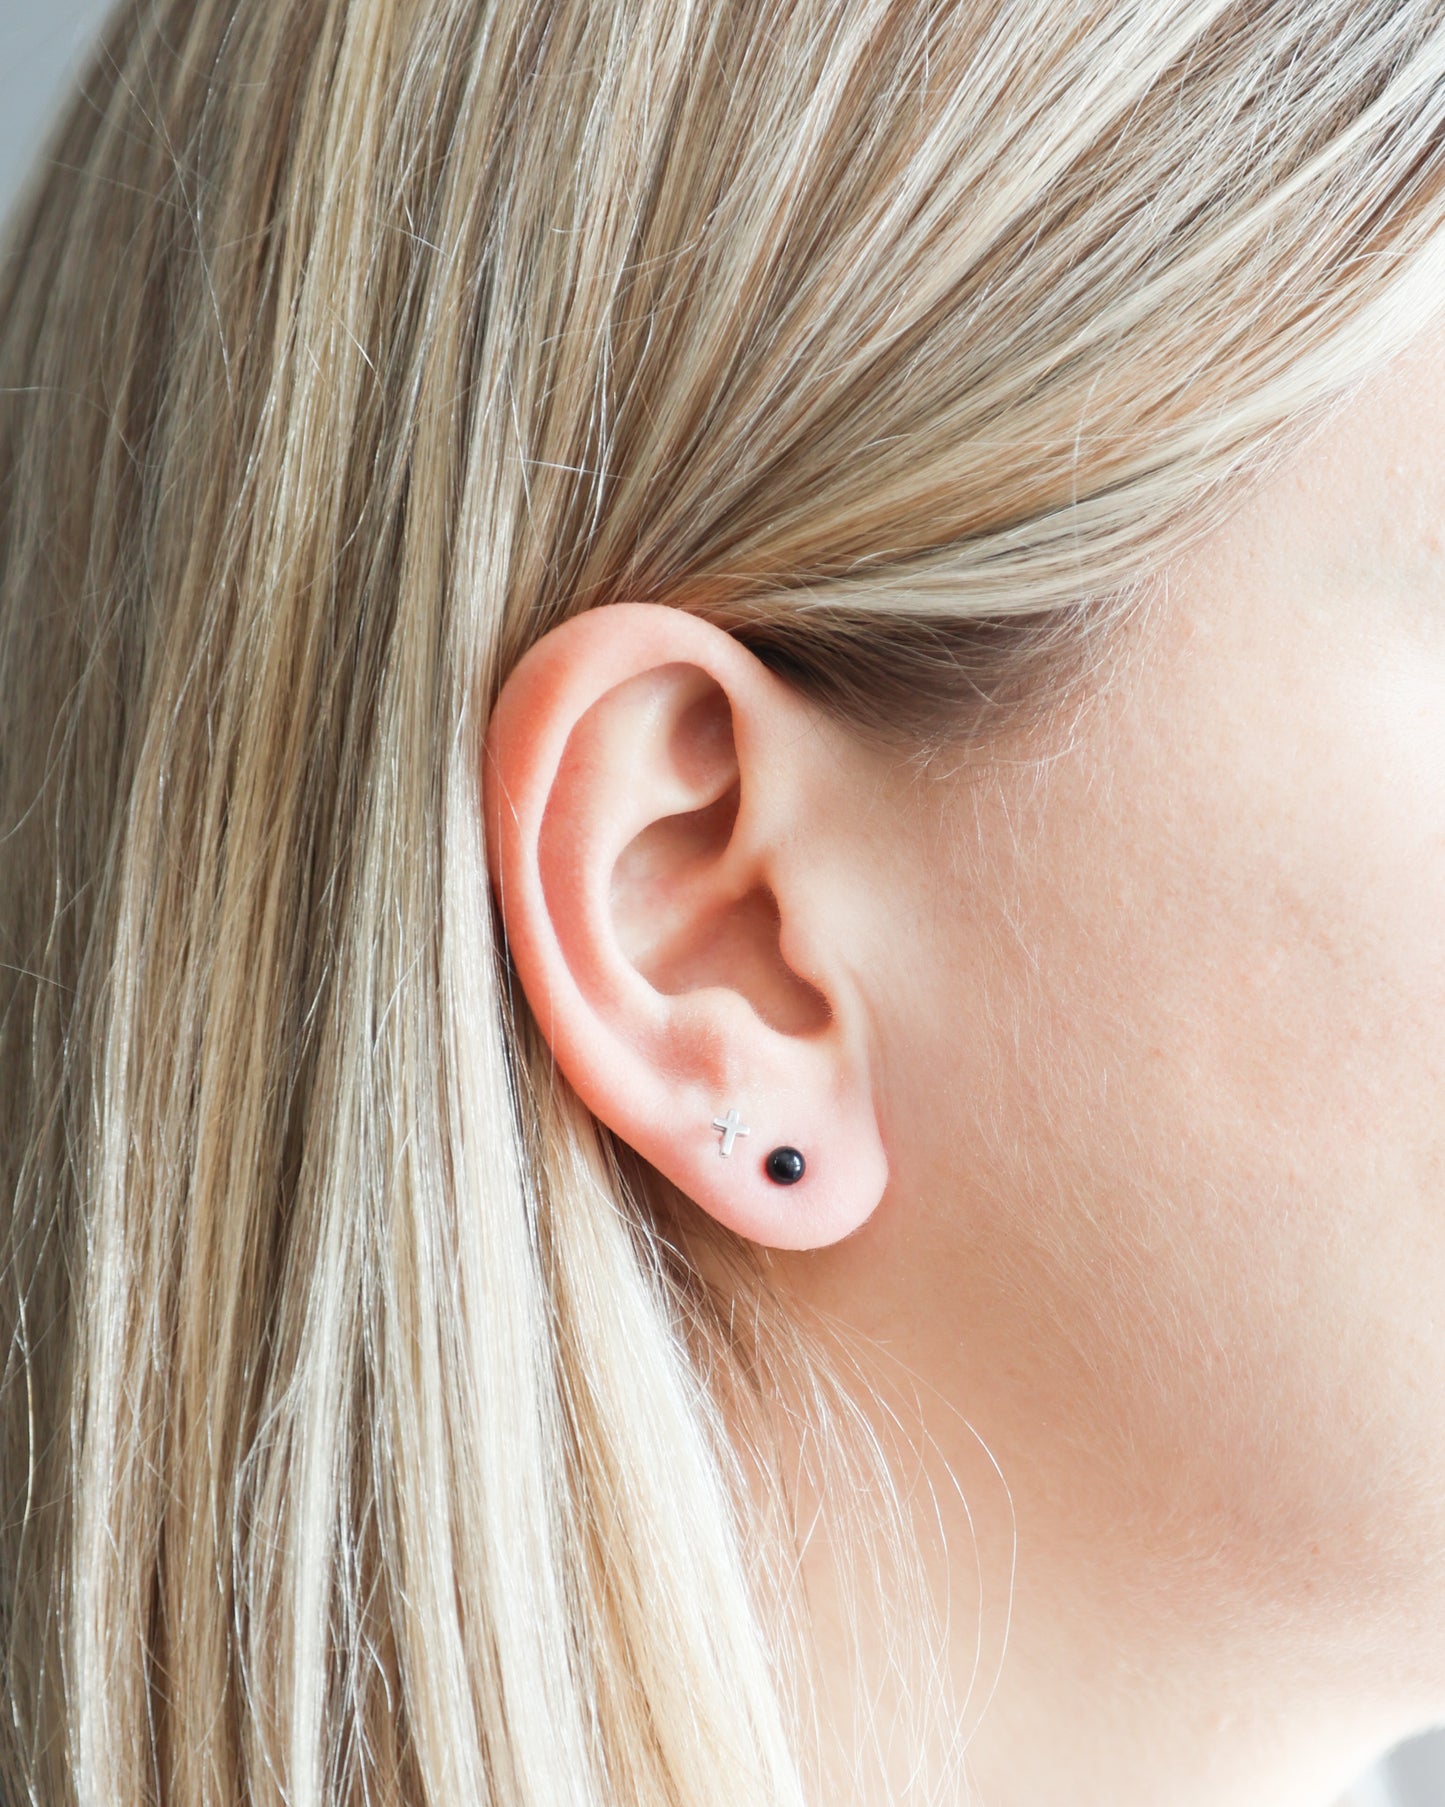 Black Agate Minimalist Stud Earrings, 925 Silver, Gift for Her or Him, Small Earrings for Sensitive Ears